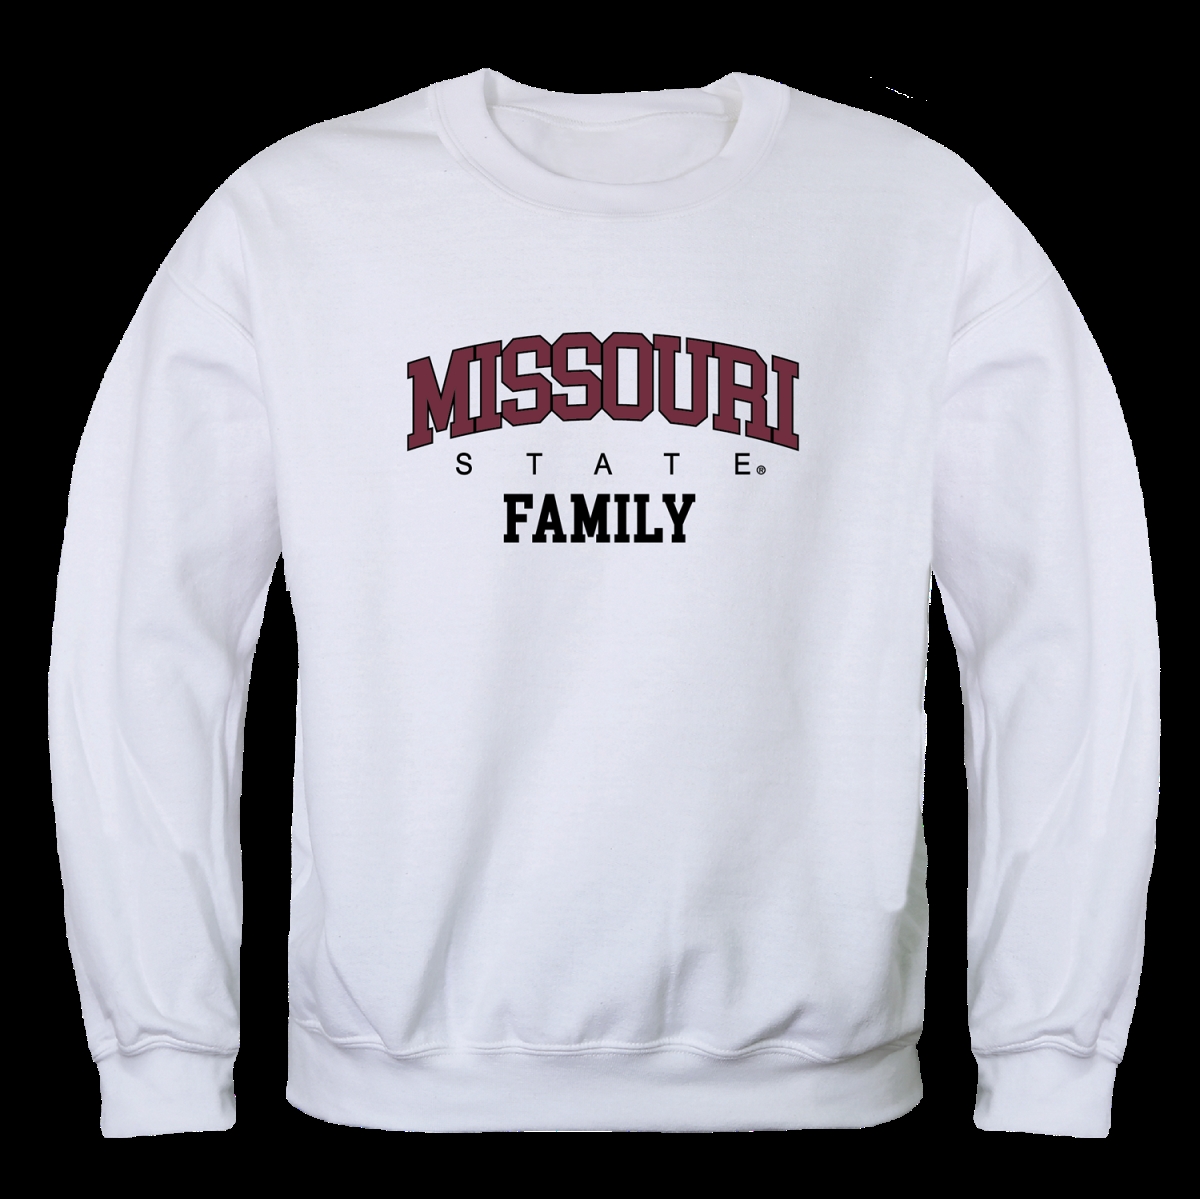 W Republic 572-547-WHT-02 Missouri State University Bears Family Crewneck Sweatshirt&#44; White - Medium